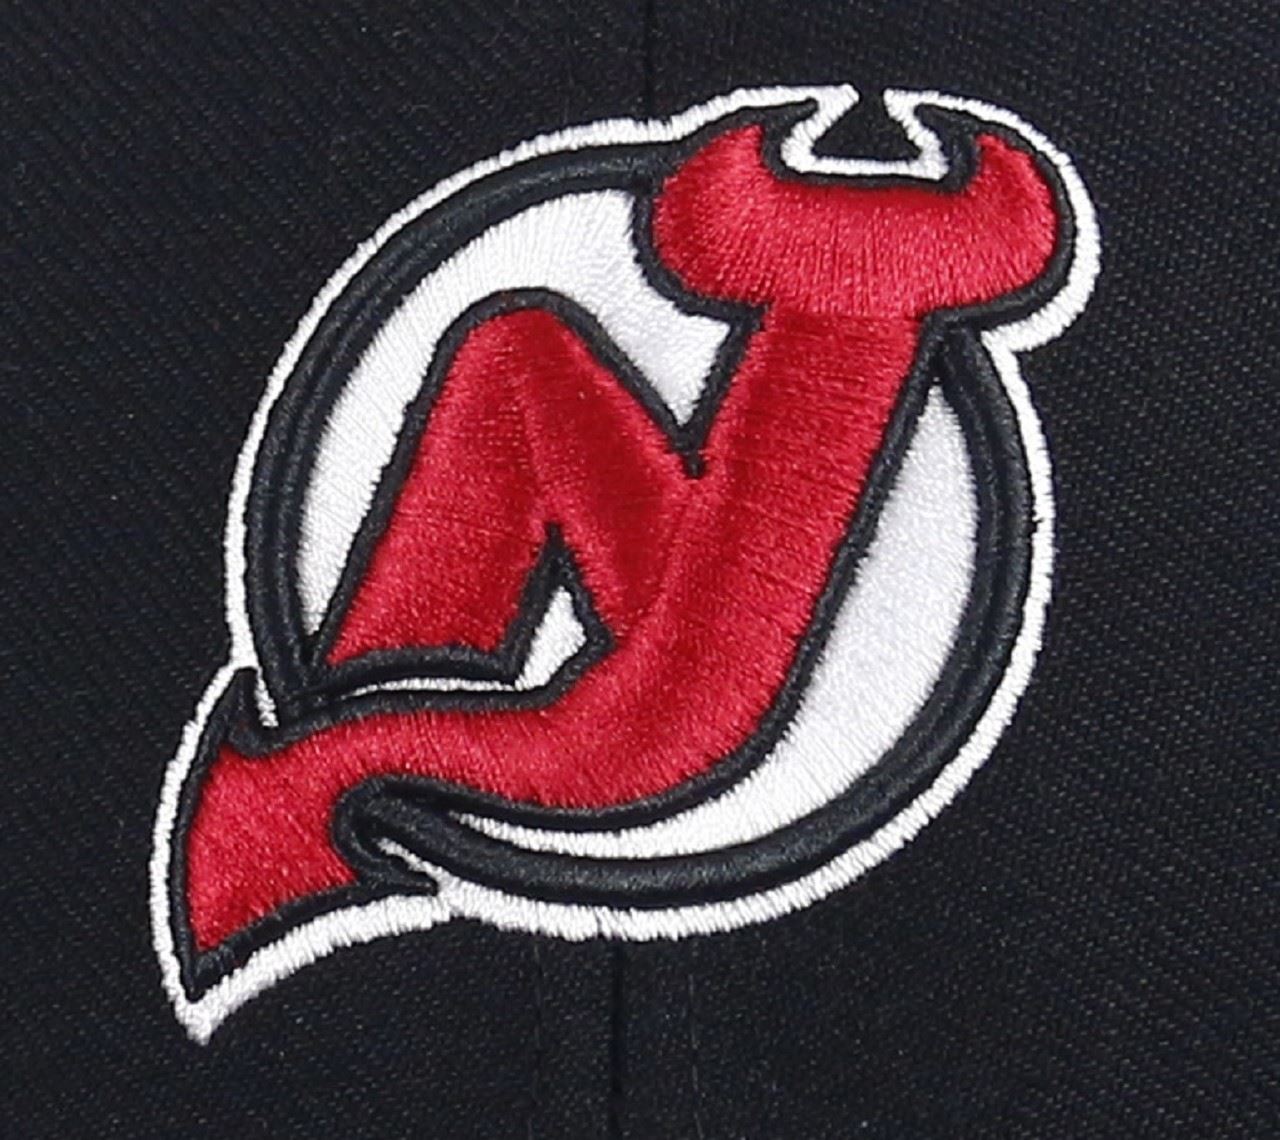 New Jersey Devils Black NHL Most Value P. Cap '47